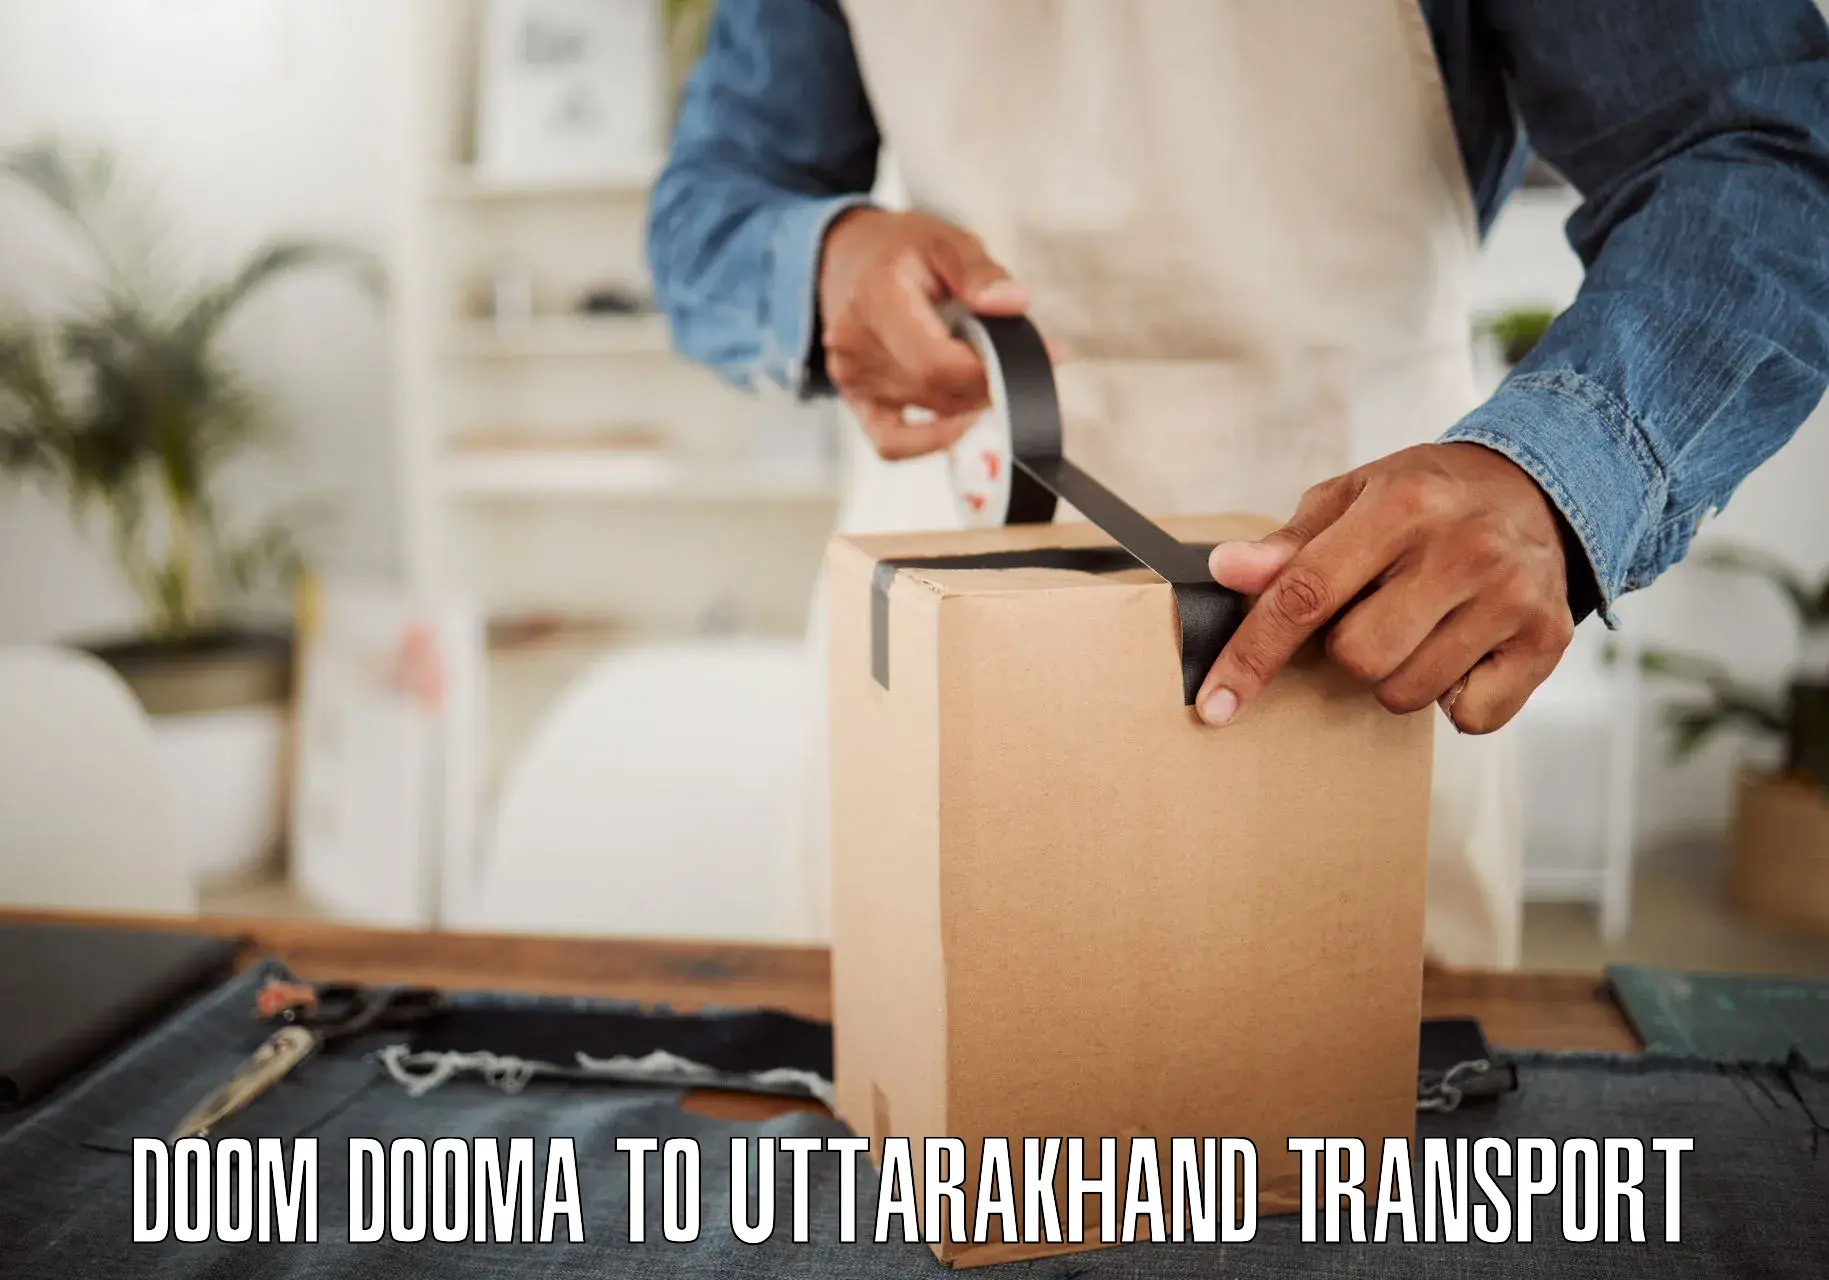 Furniture transport service Doom Dooma to Ranikhet